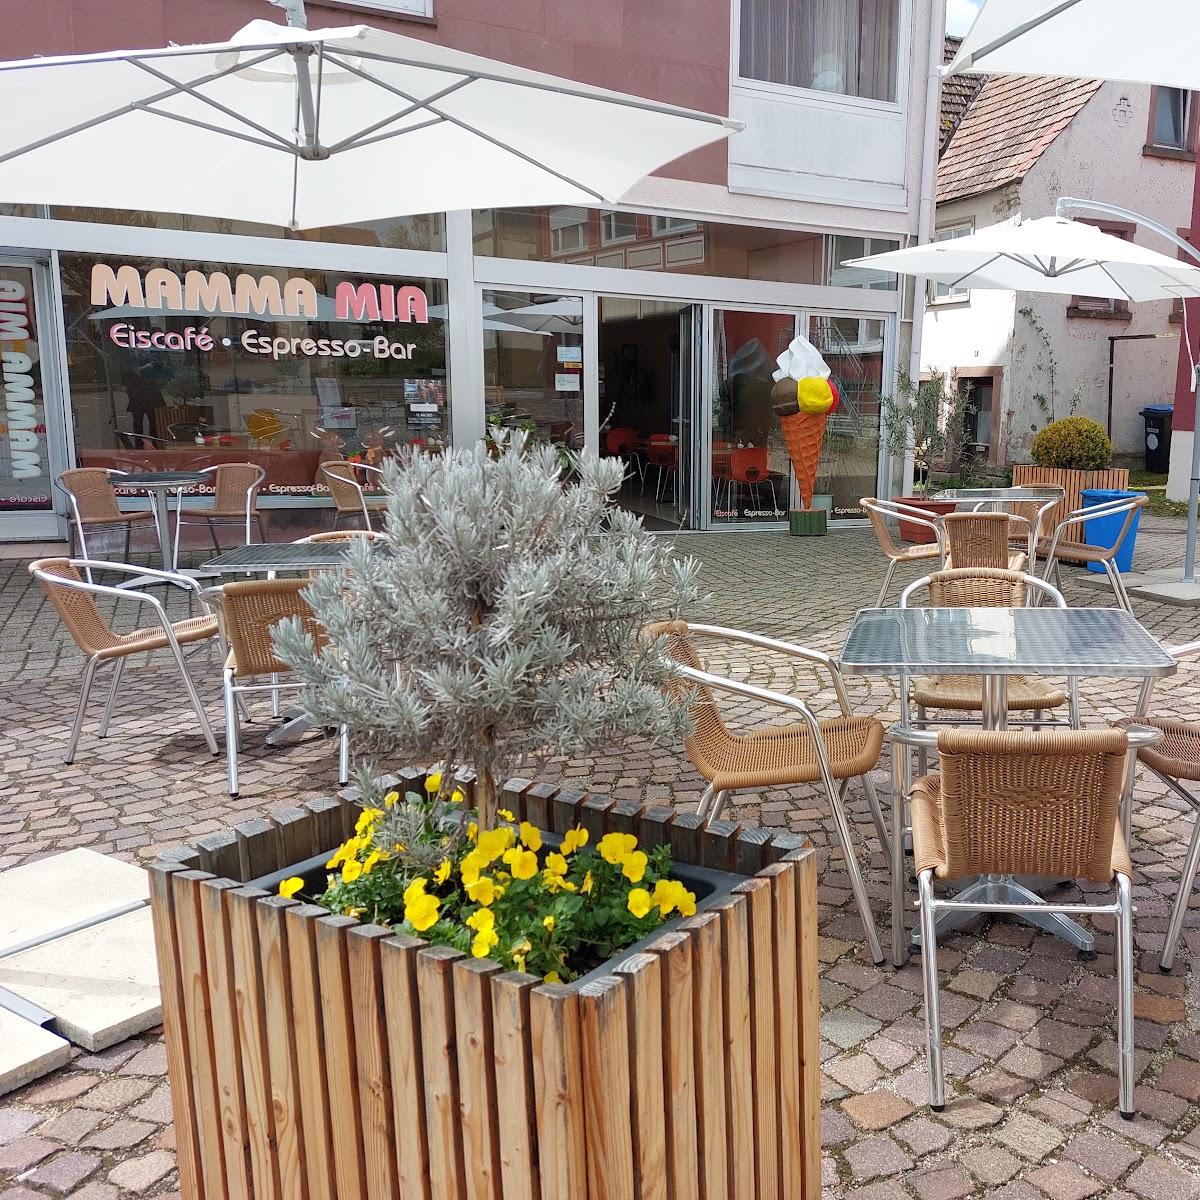 Restaurant "Mamma Mia" in Pfalzgrafenweiler